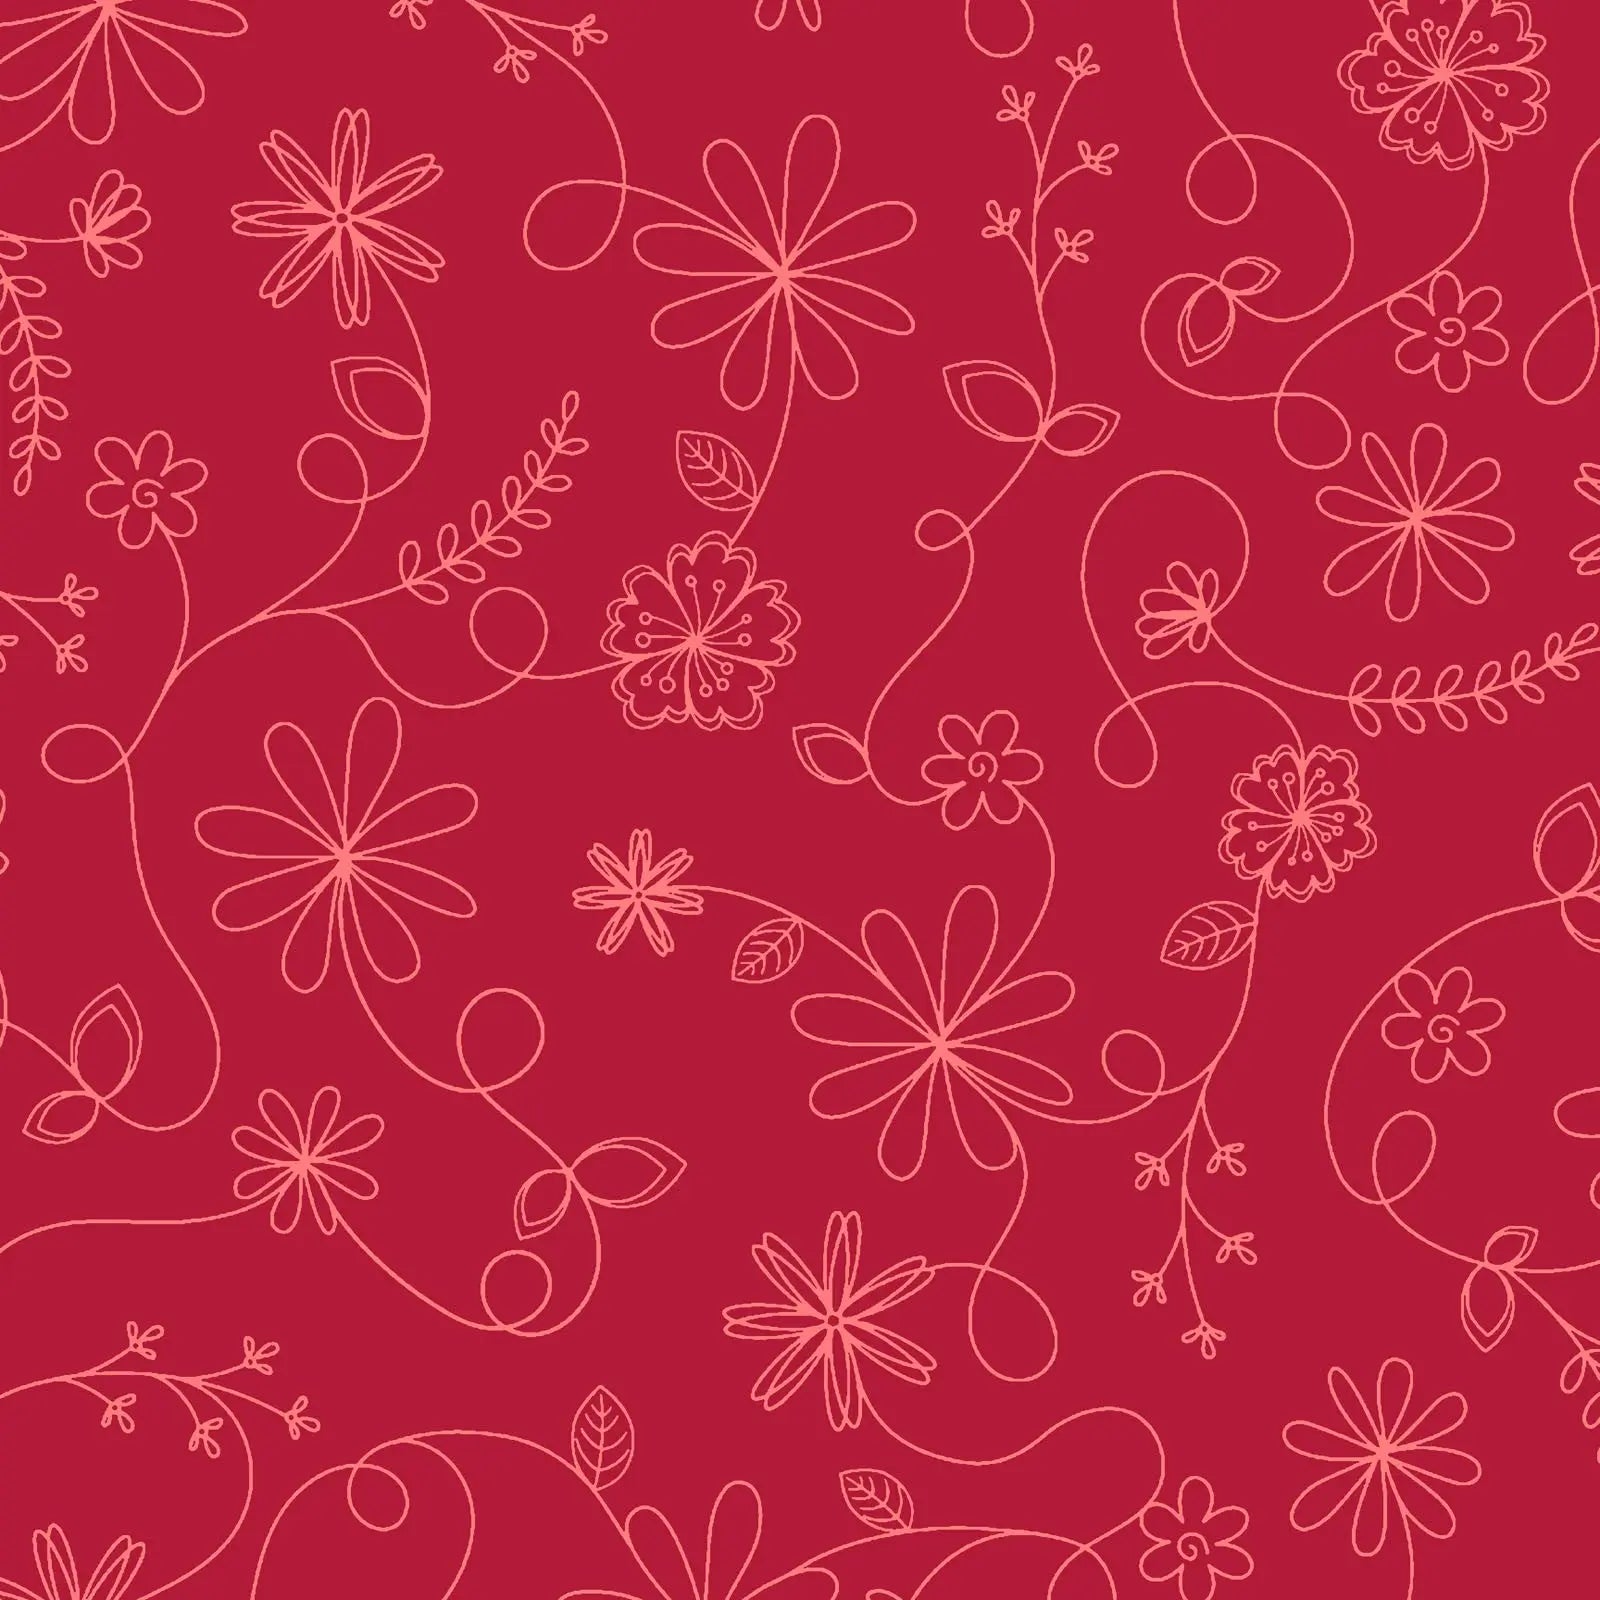 Red Swirl Floral Cotton Wideback Fabric per yard